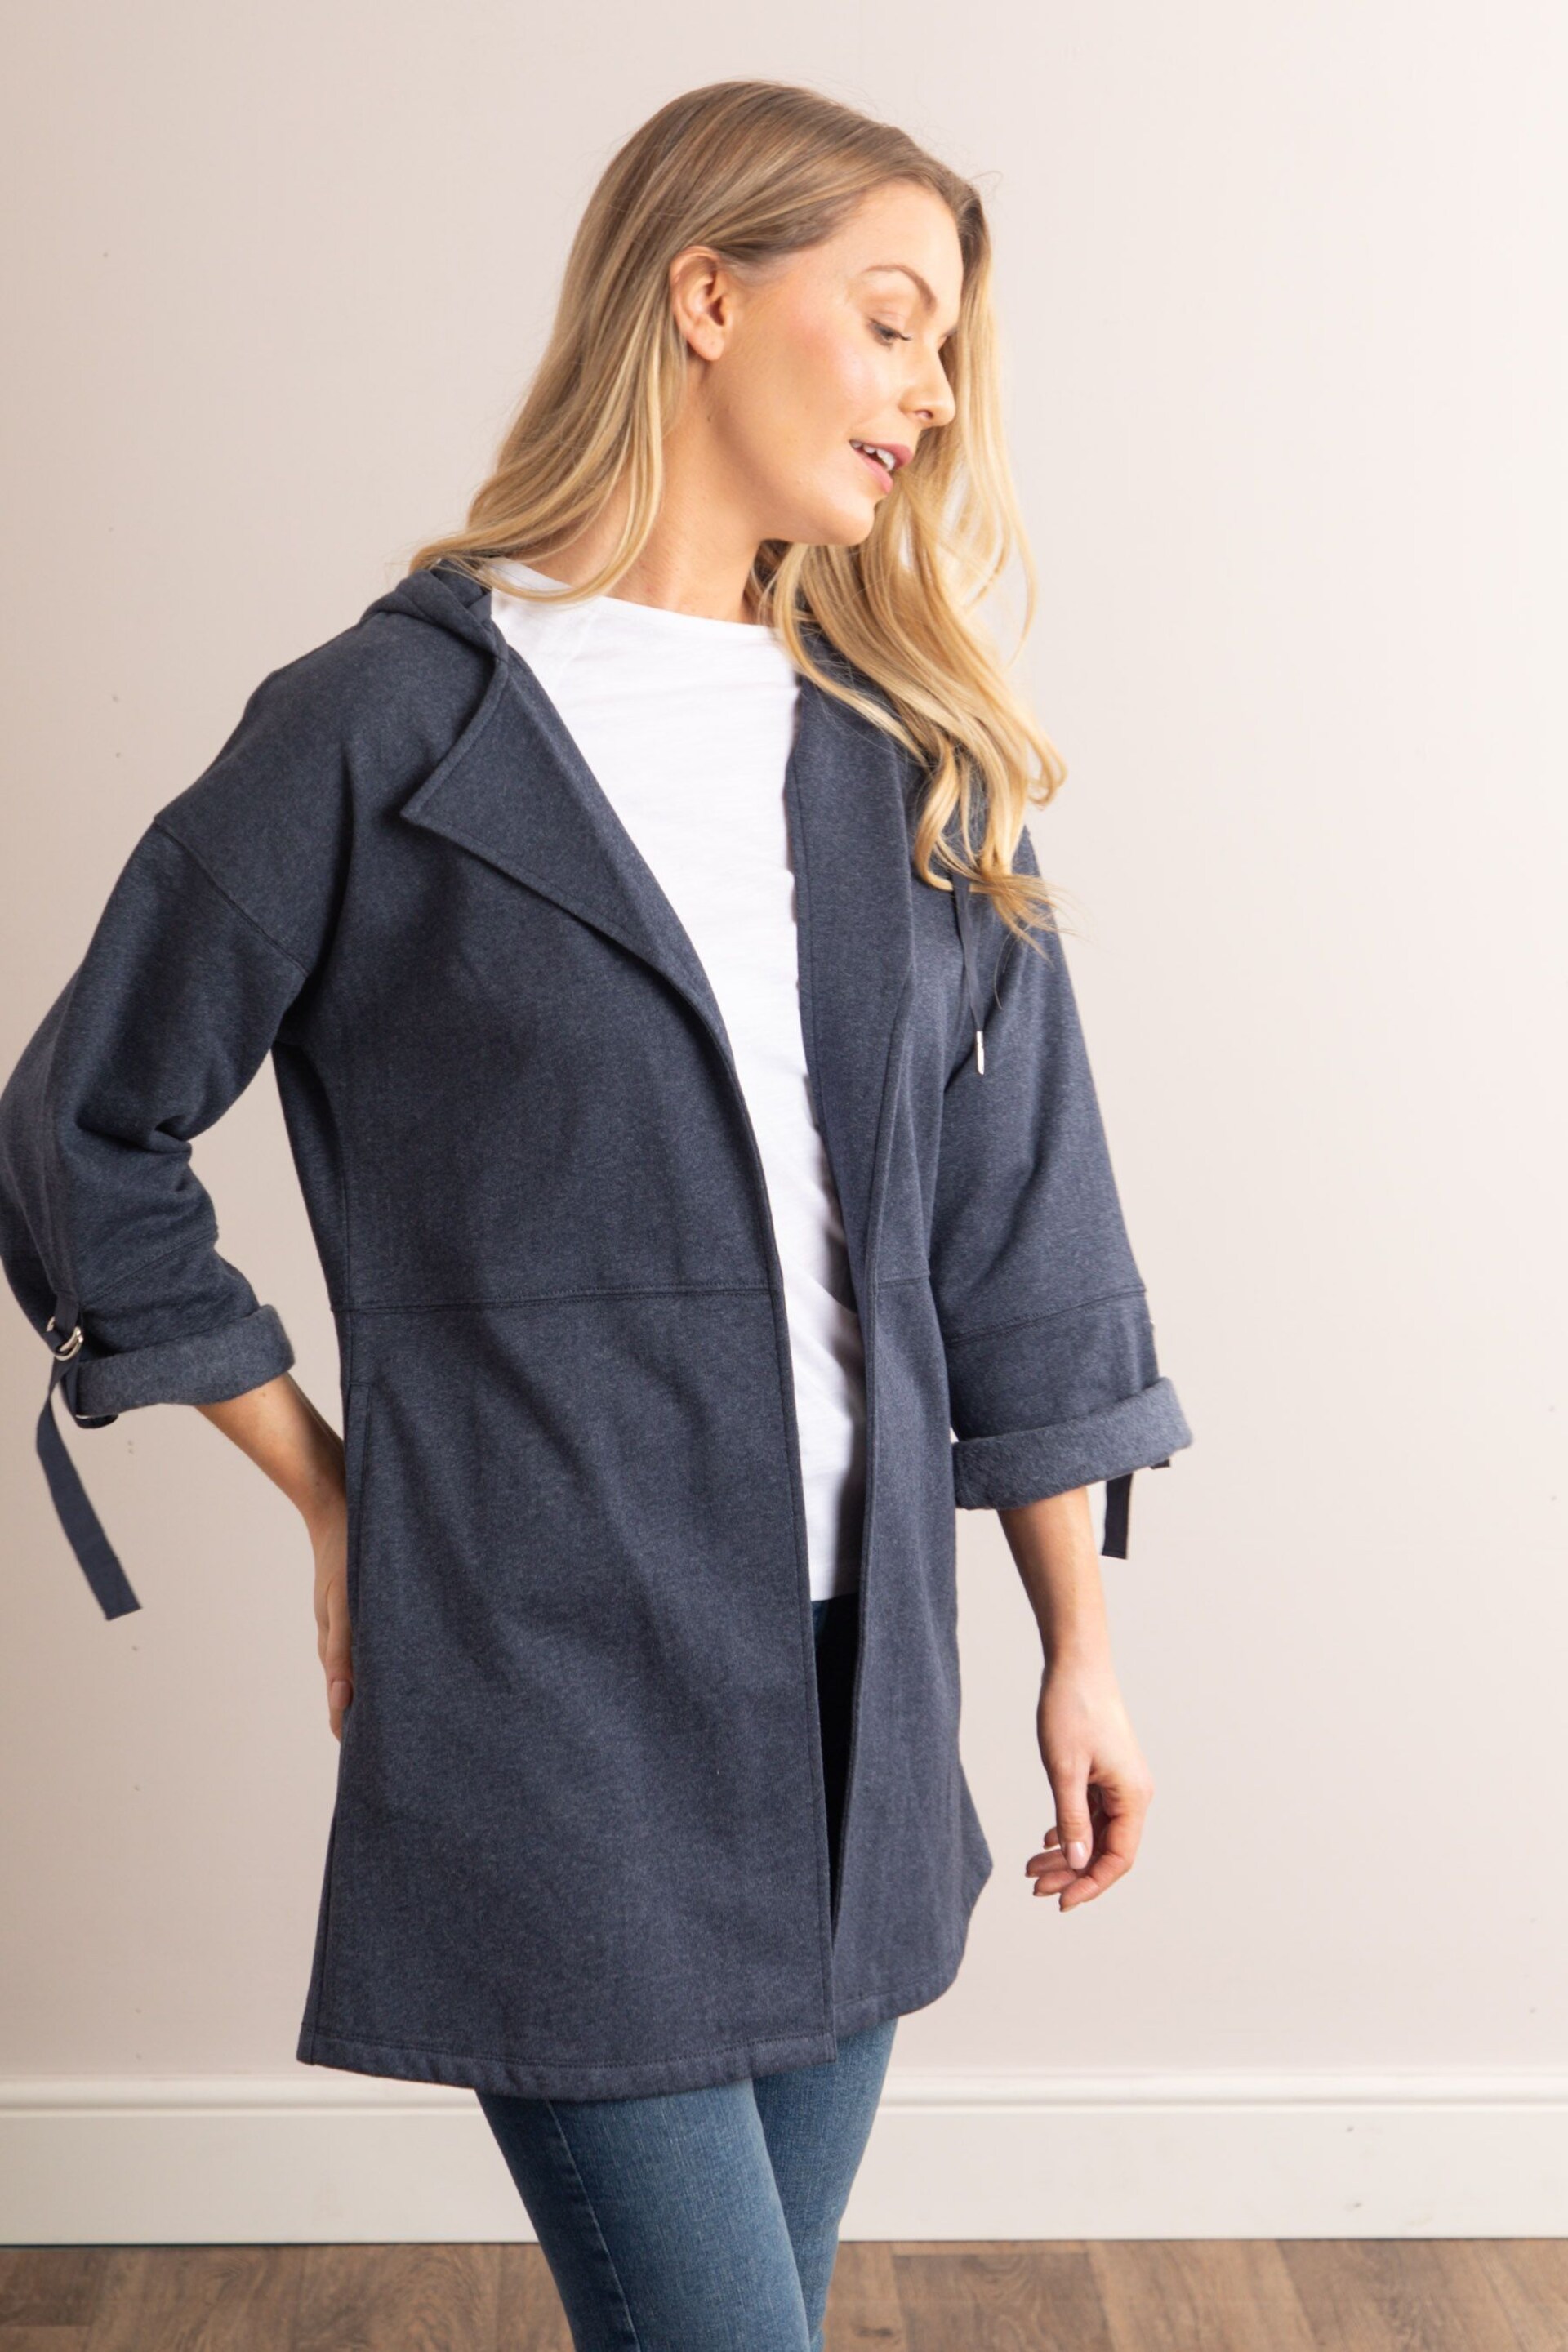 Lakeland Leather Blue Chloe Hooded Fleece Jersey Jacket - Image 4 of 11